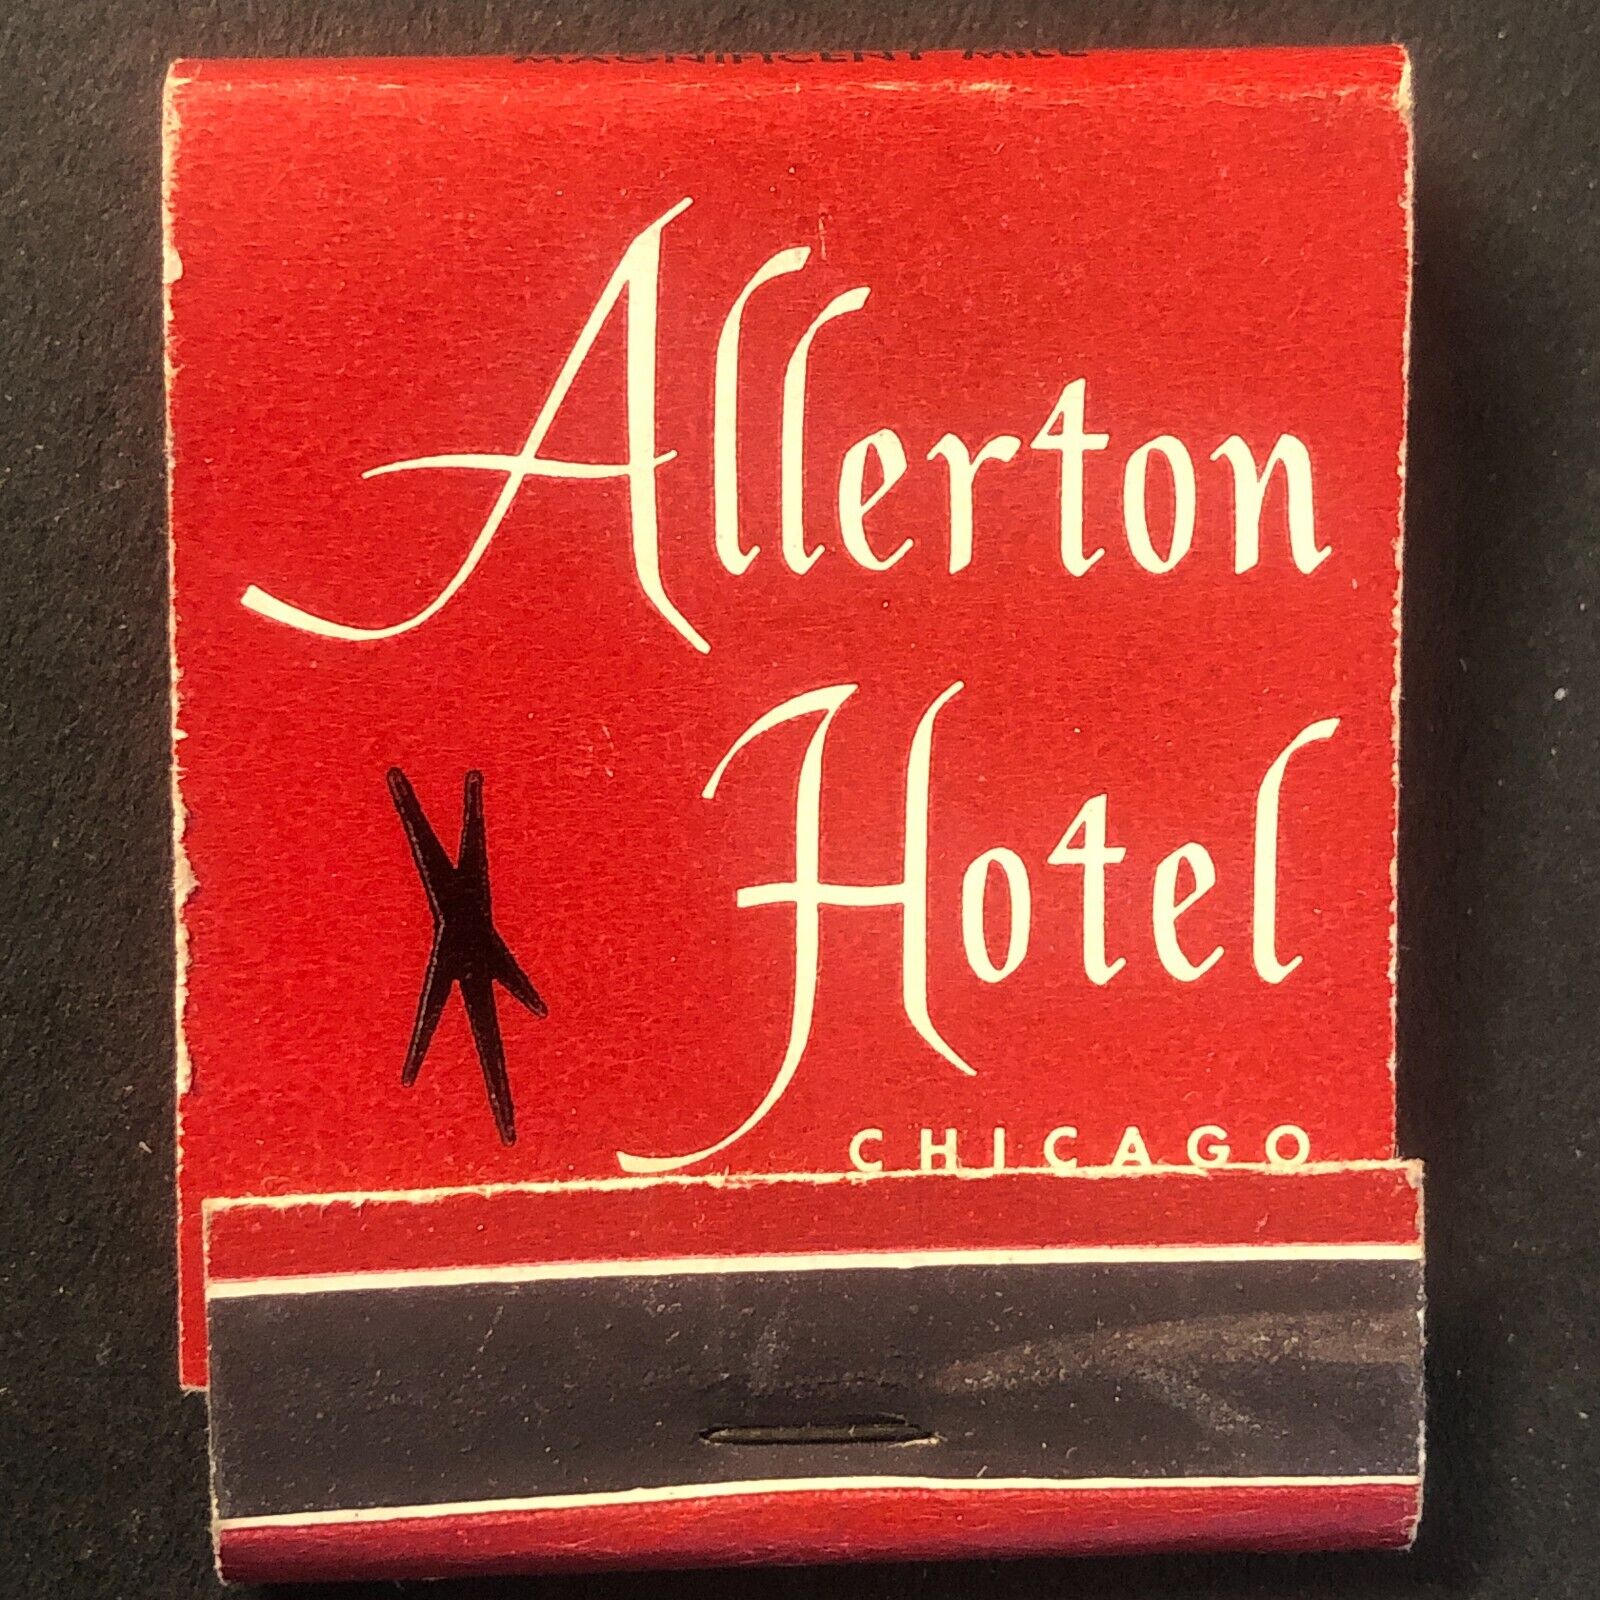 Allerton Hotel Chicago Vintage Mostly Full (-1) Matchbook c1940's-50's Scarce